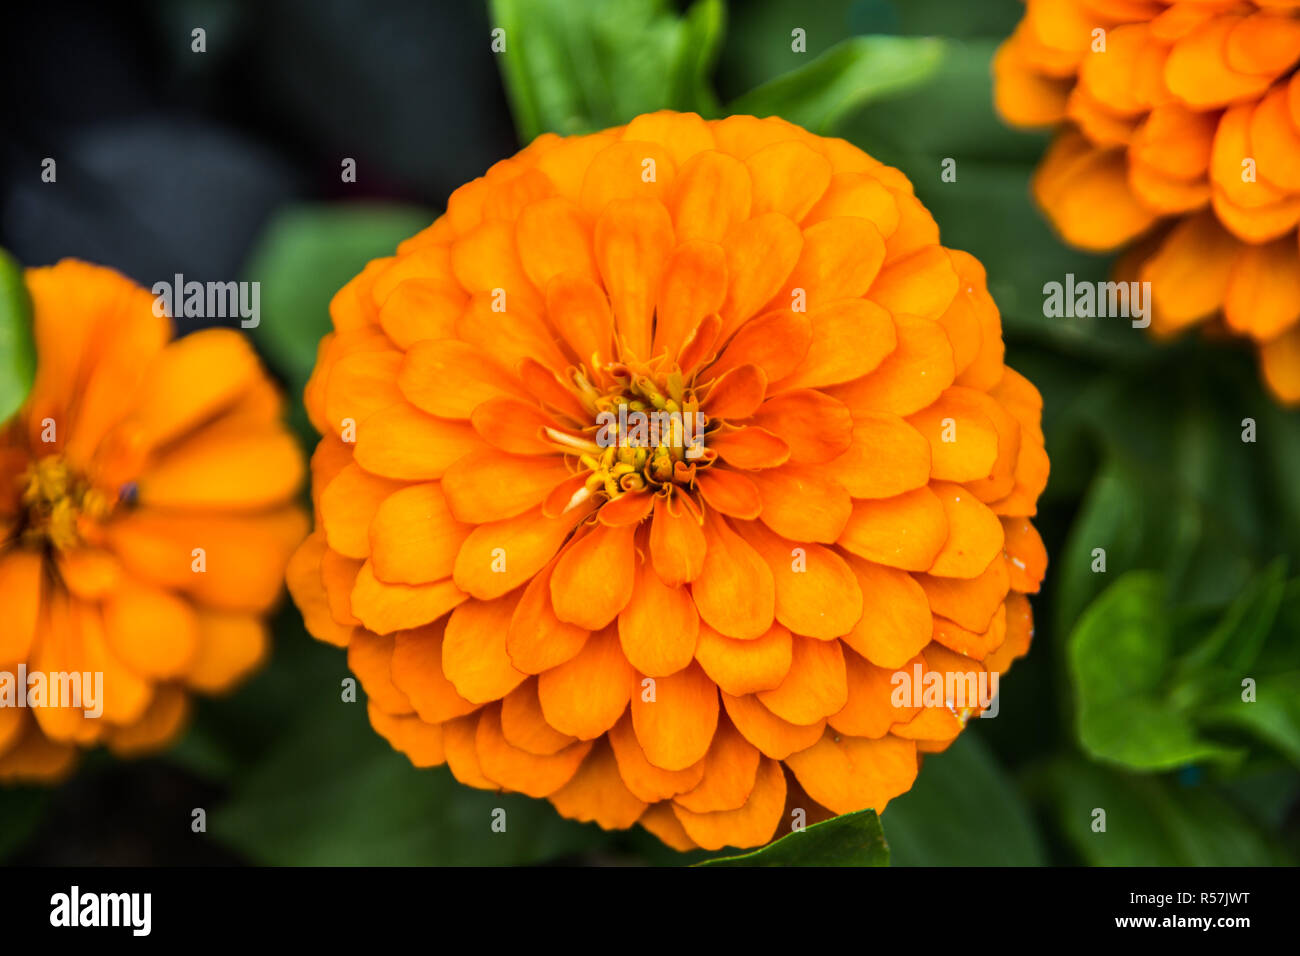 marigold with orange blossom Stock Photo